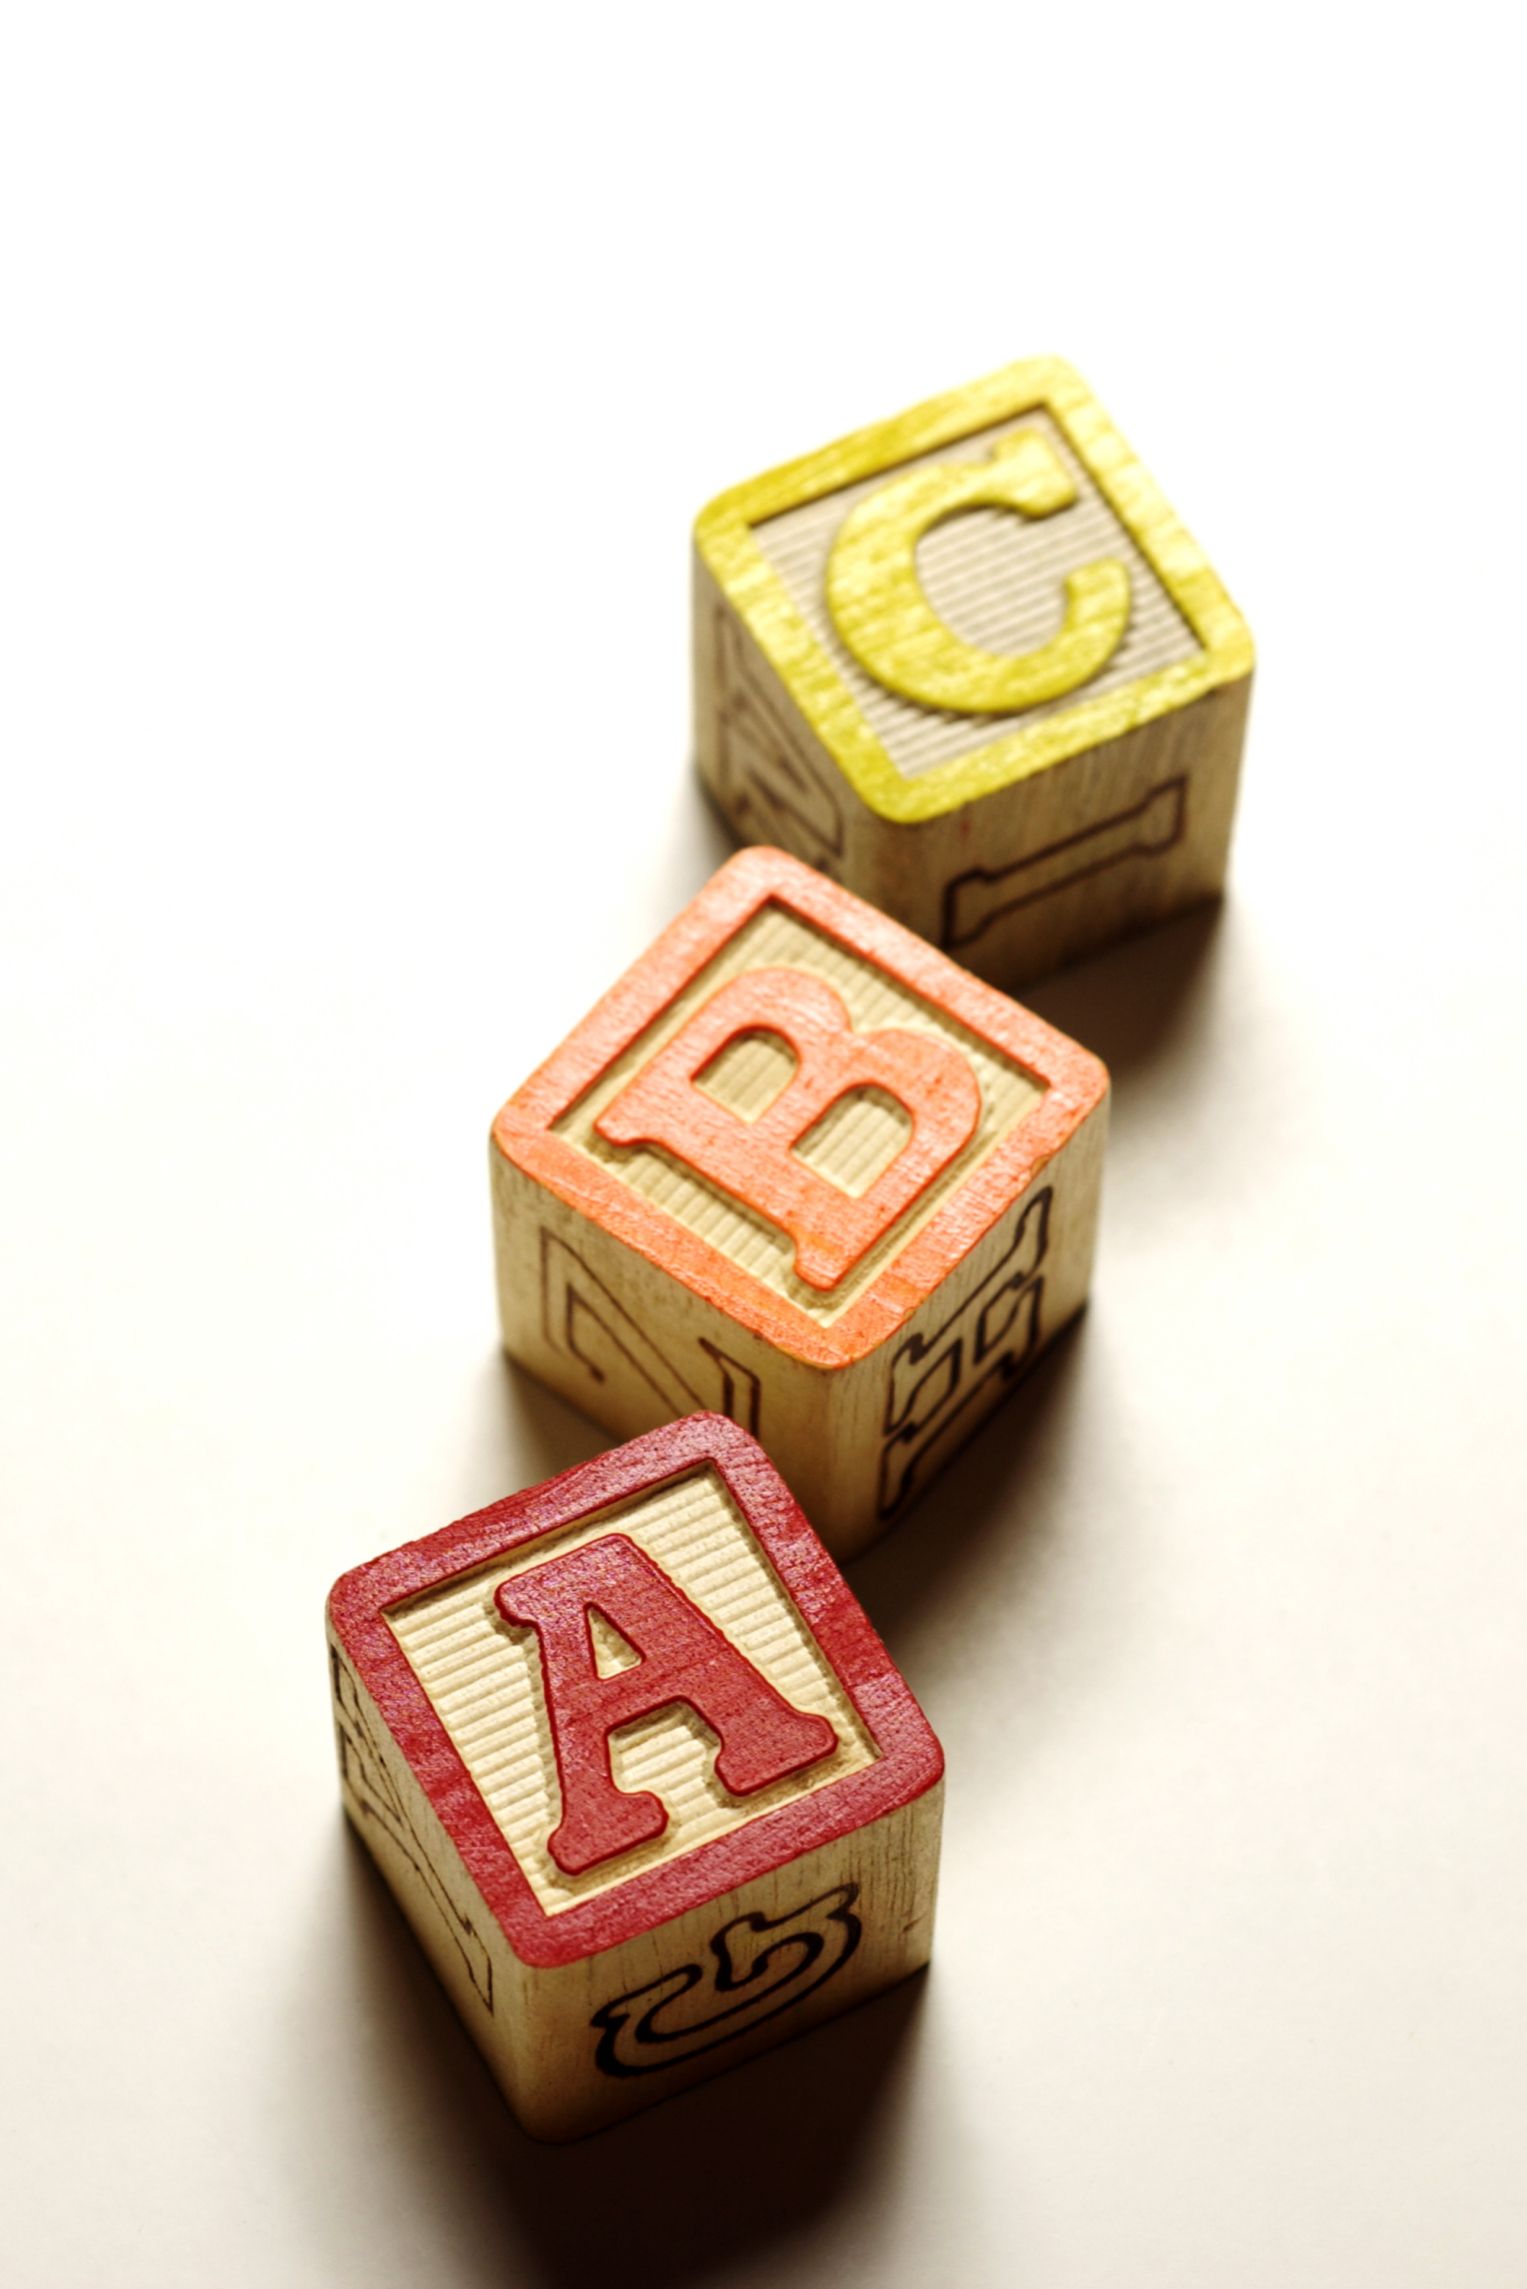 Decorative Letter Blocks